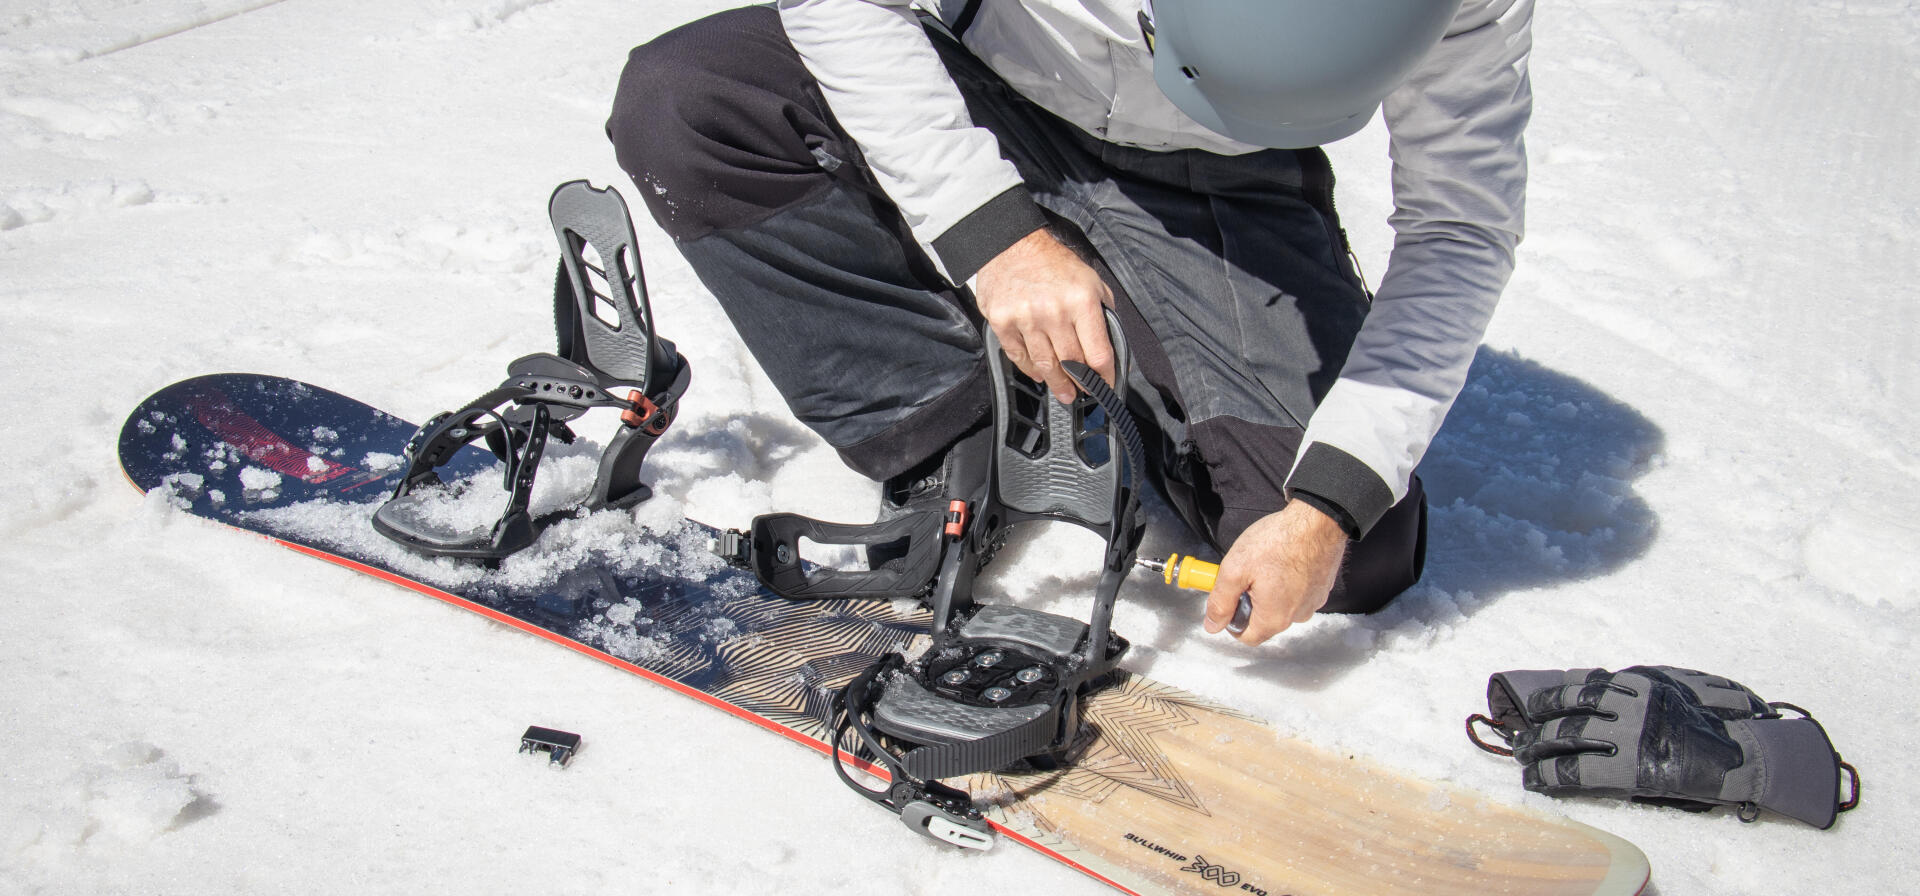 How to Mount Snowboard Bindings & Other Binding Basics